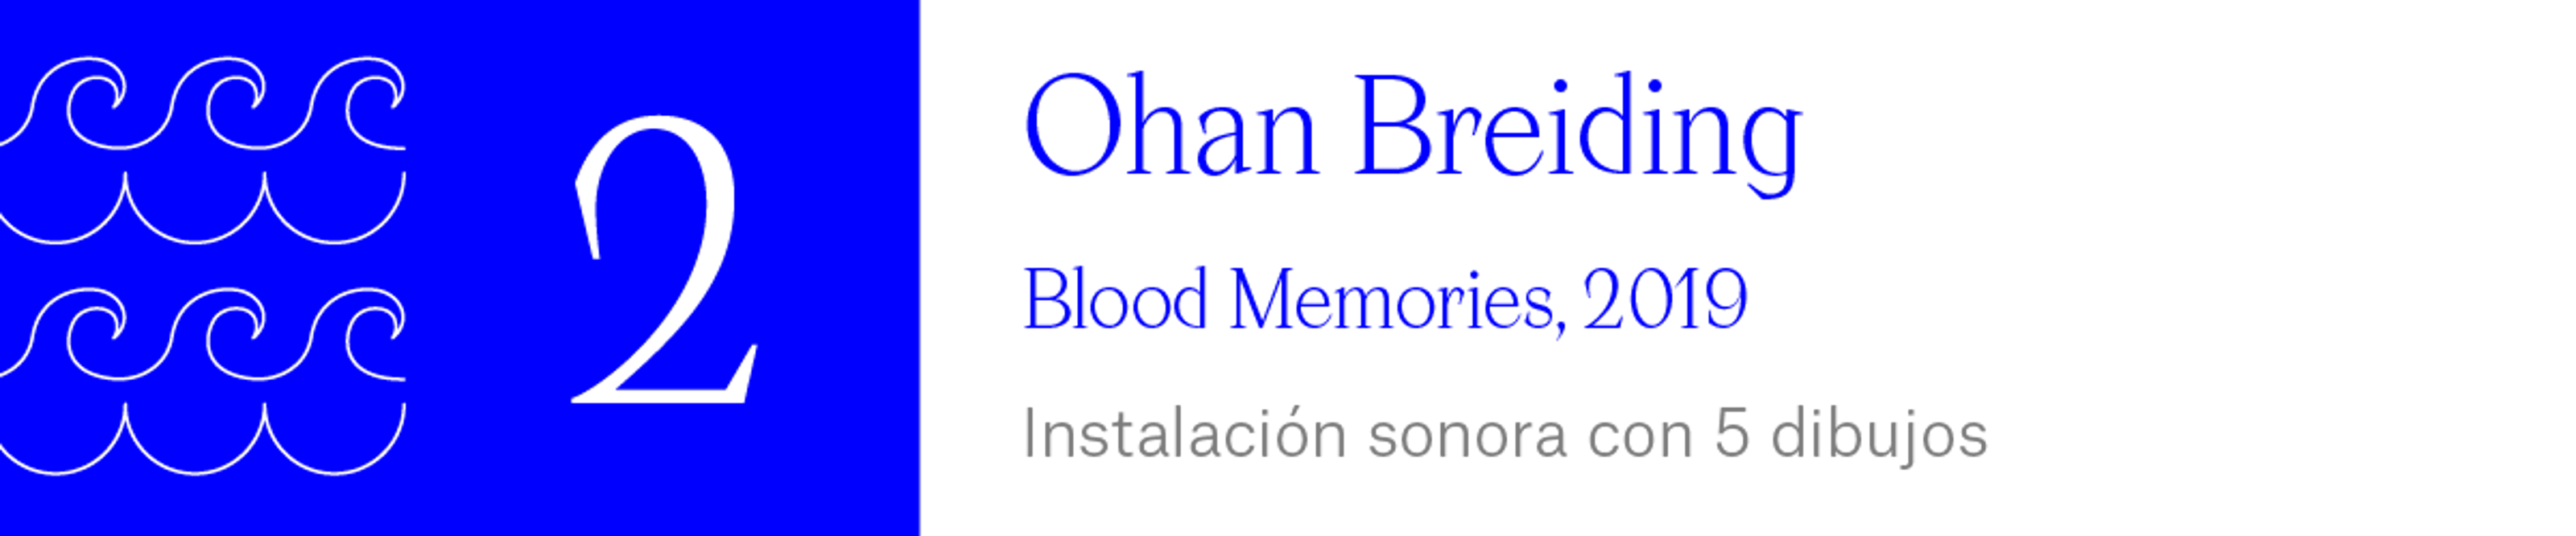 Ohan Breiding - Blood Memories, 2019 Instalación sonora con 5 dibujos